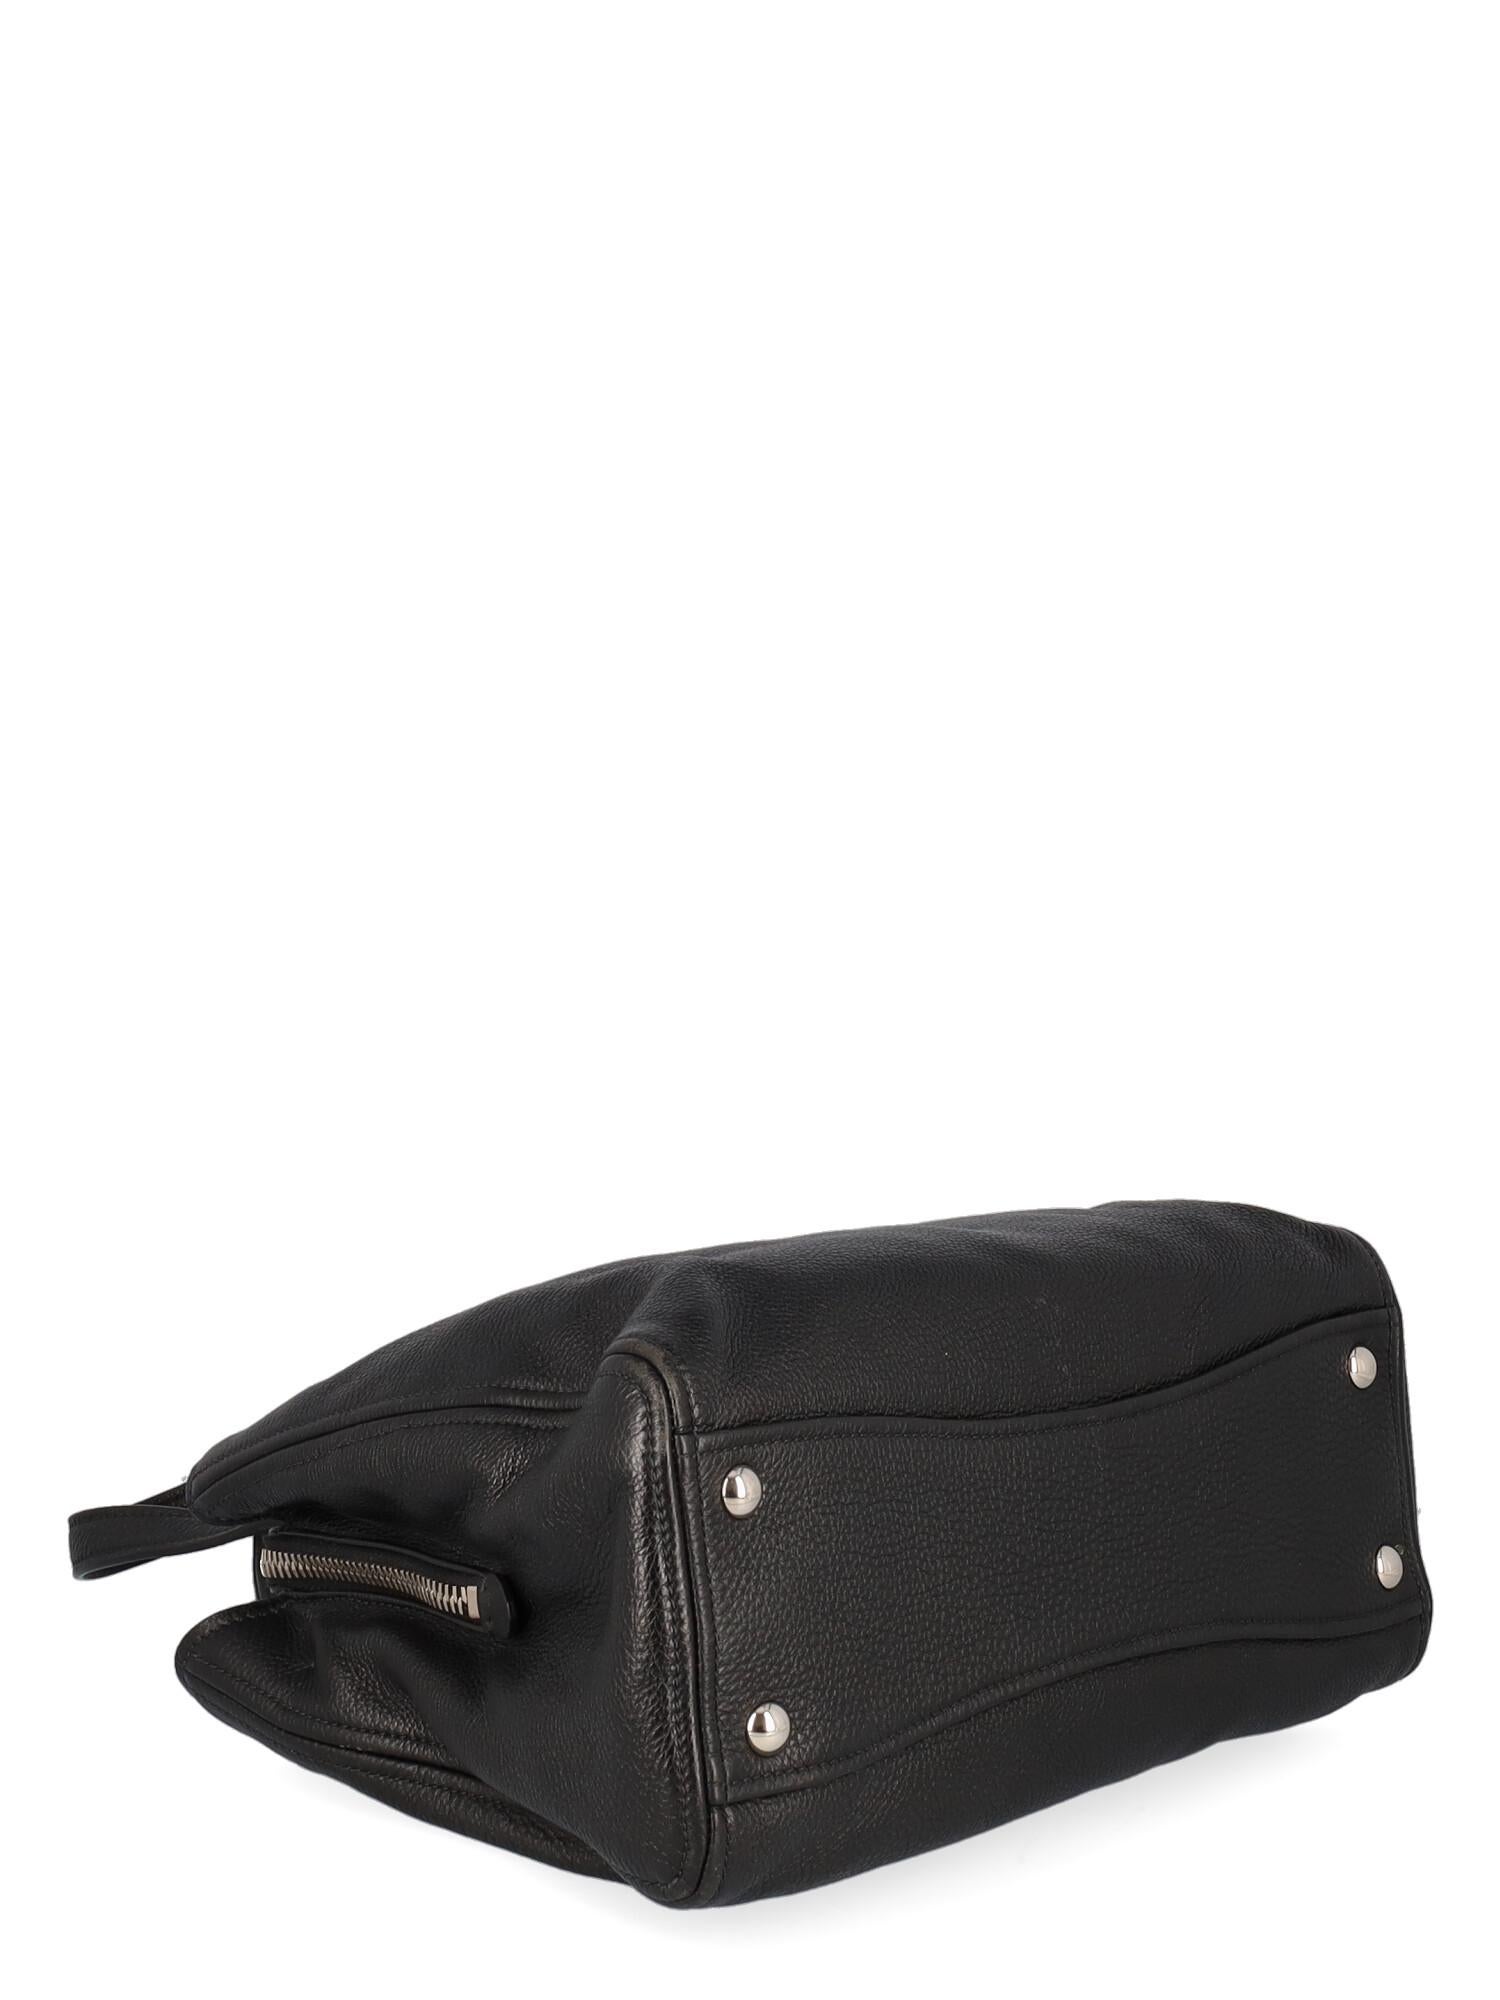 Miu Miu Women Shoulder bags Black Leather  For Sale 1